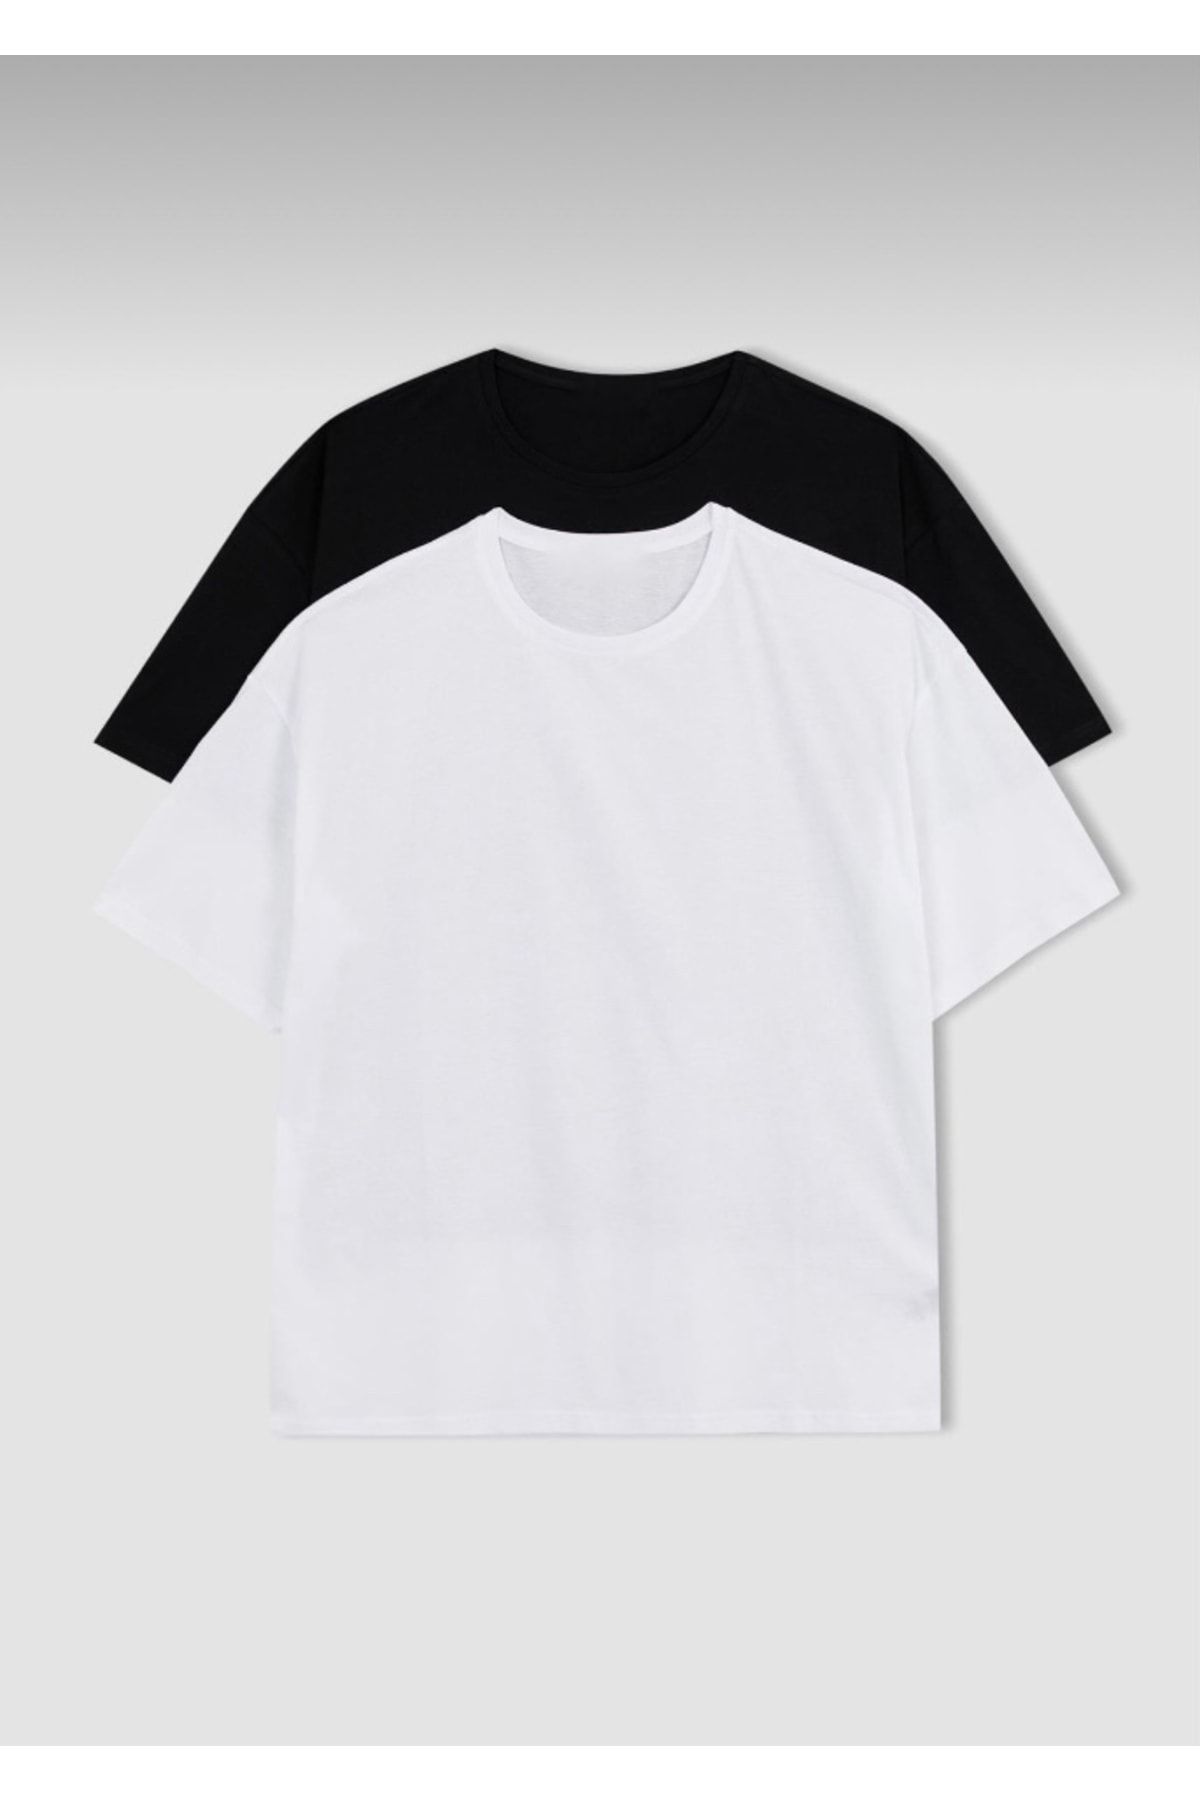 JAKARLI Unisex 2’li Hazır Paket Siyah - Beyaz Oversize T-shirt